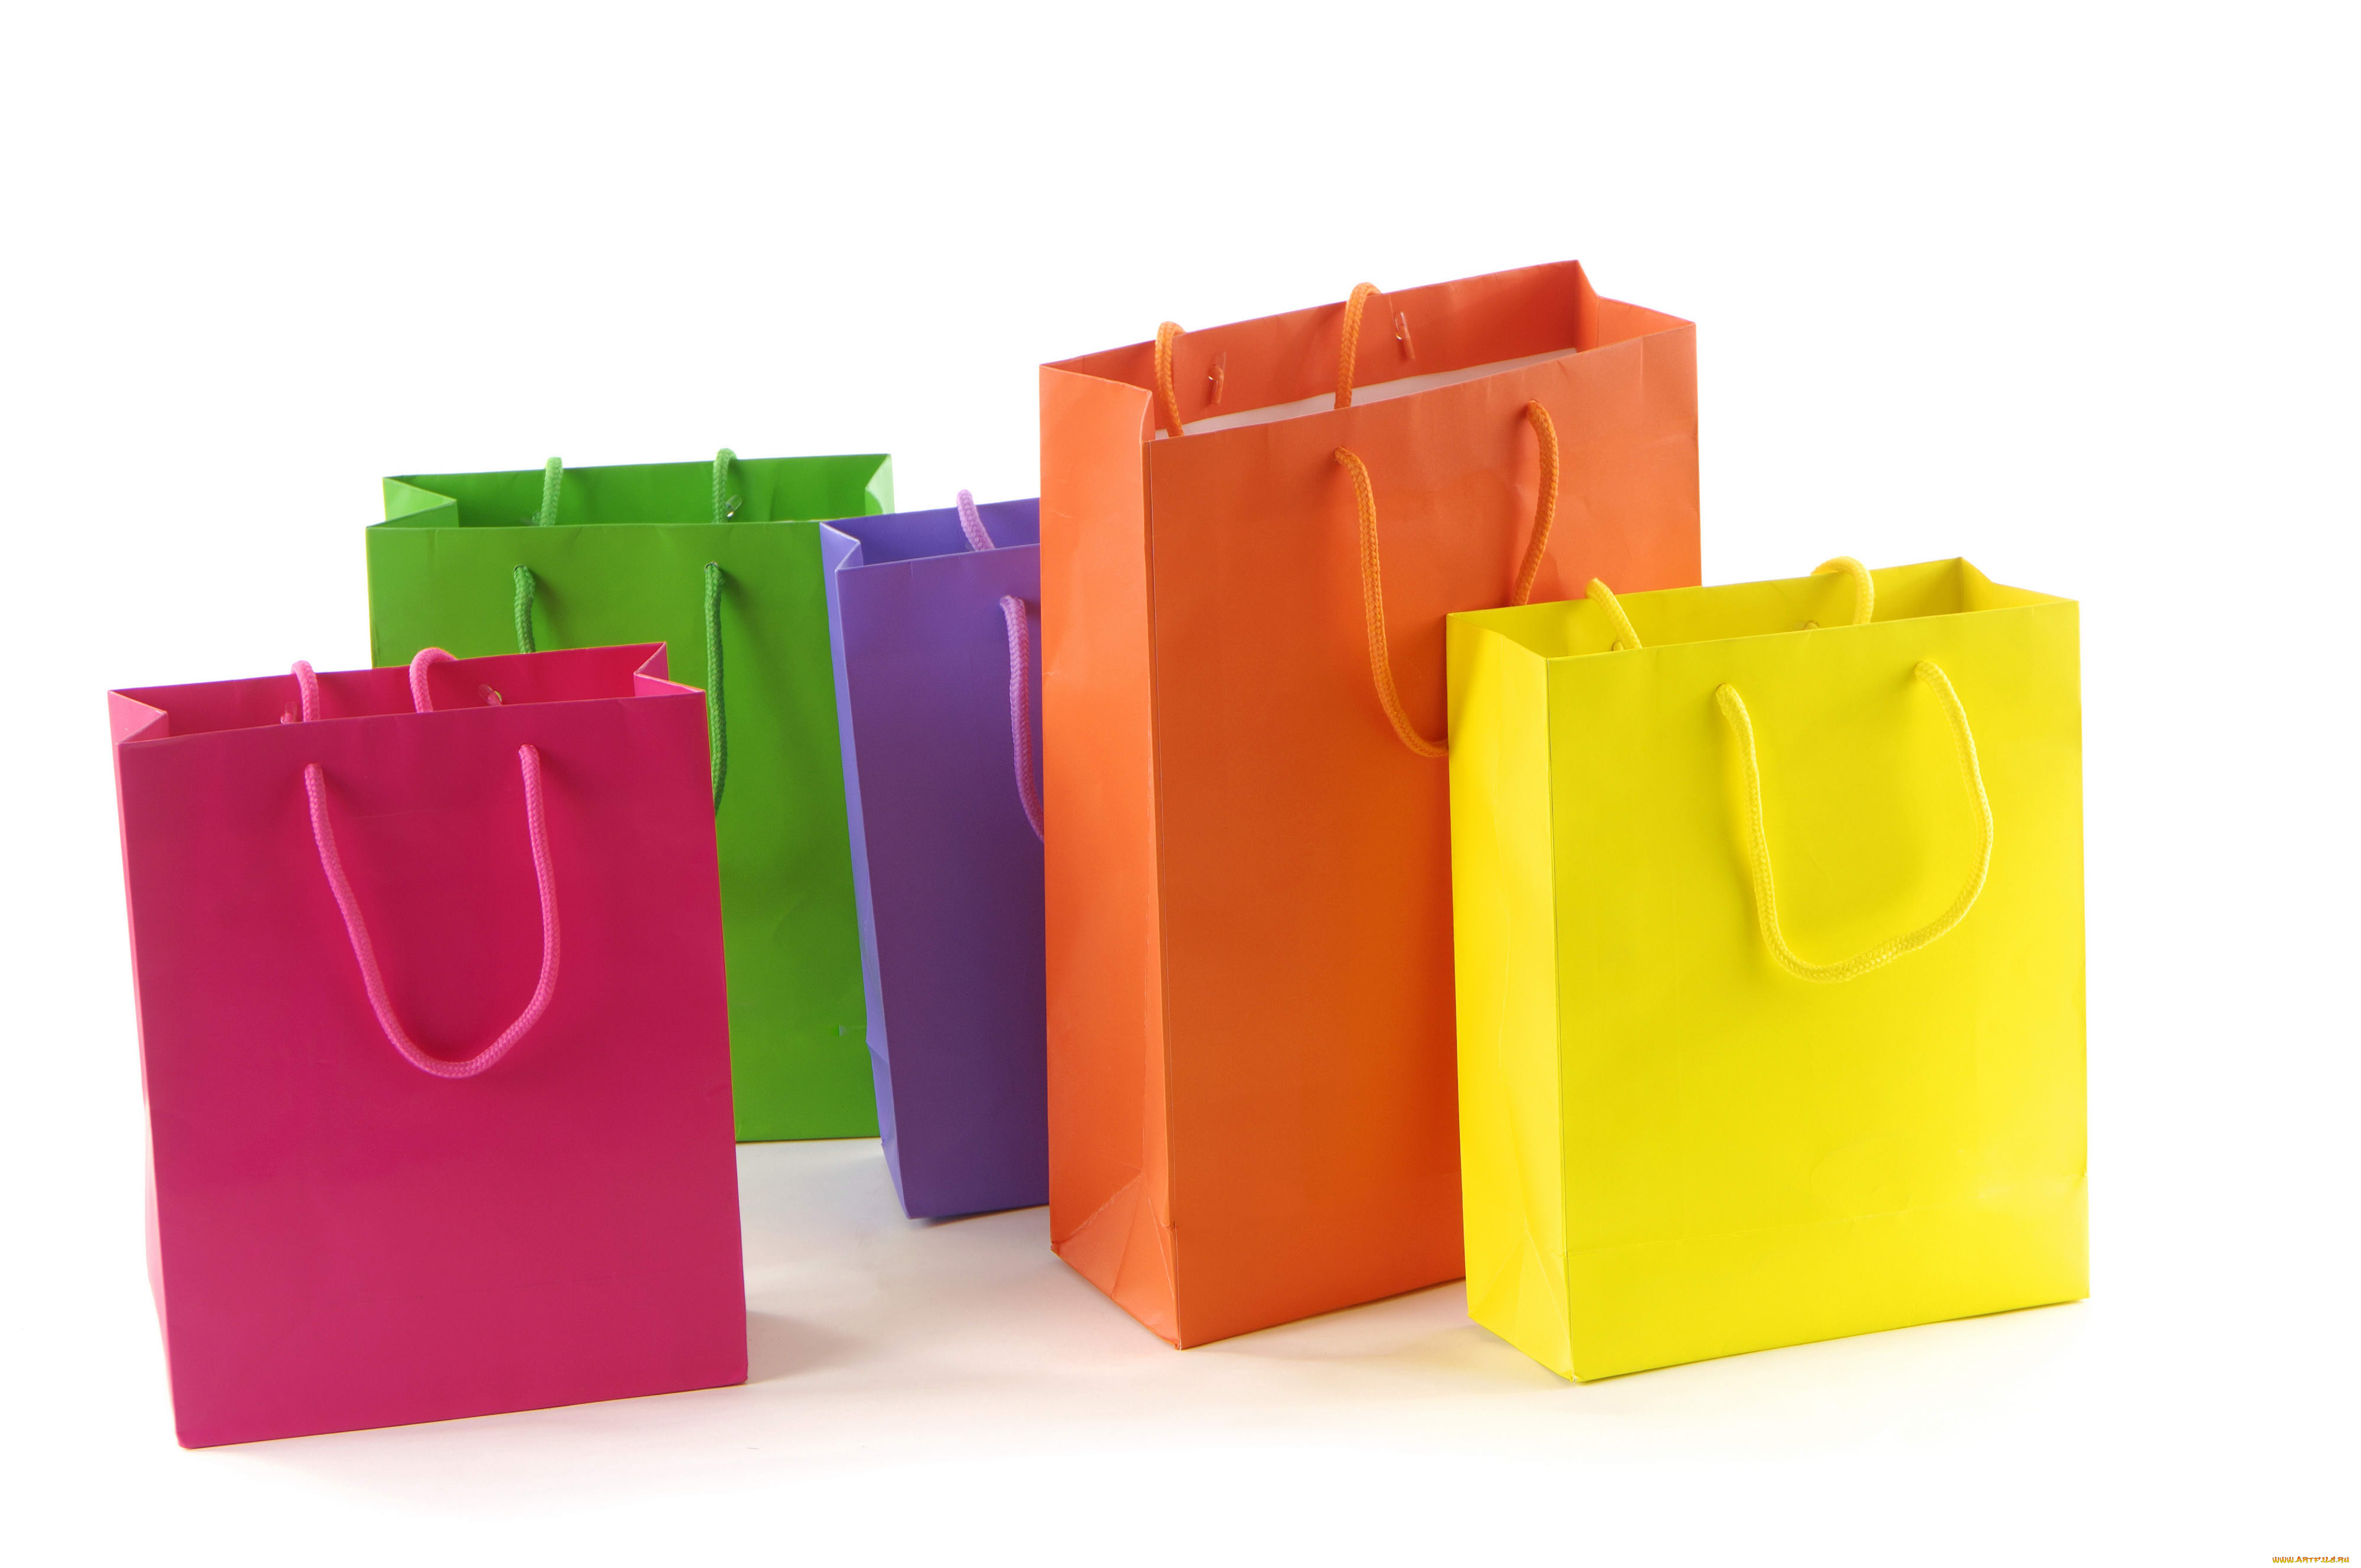 Bags shop 1. Пакет бумажный. Подарочный пакет. Пакет для подарка. Разноцветные пакеты.